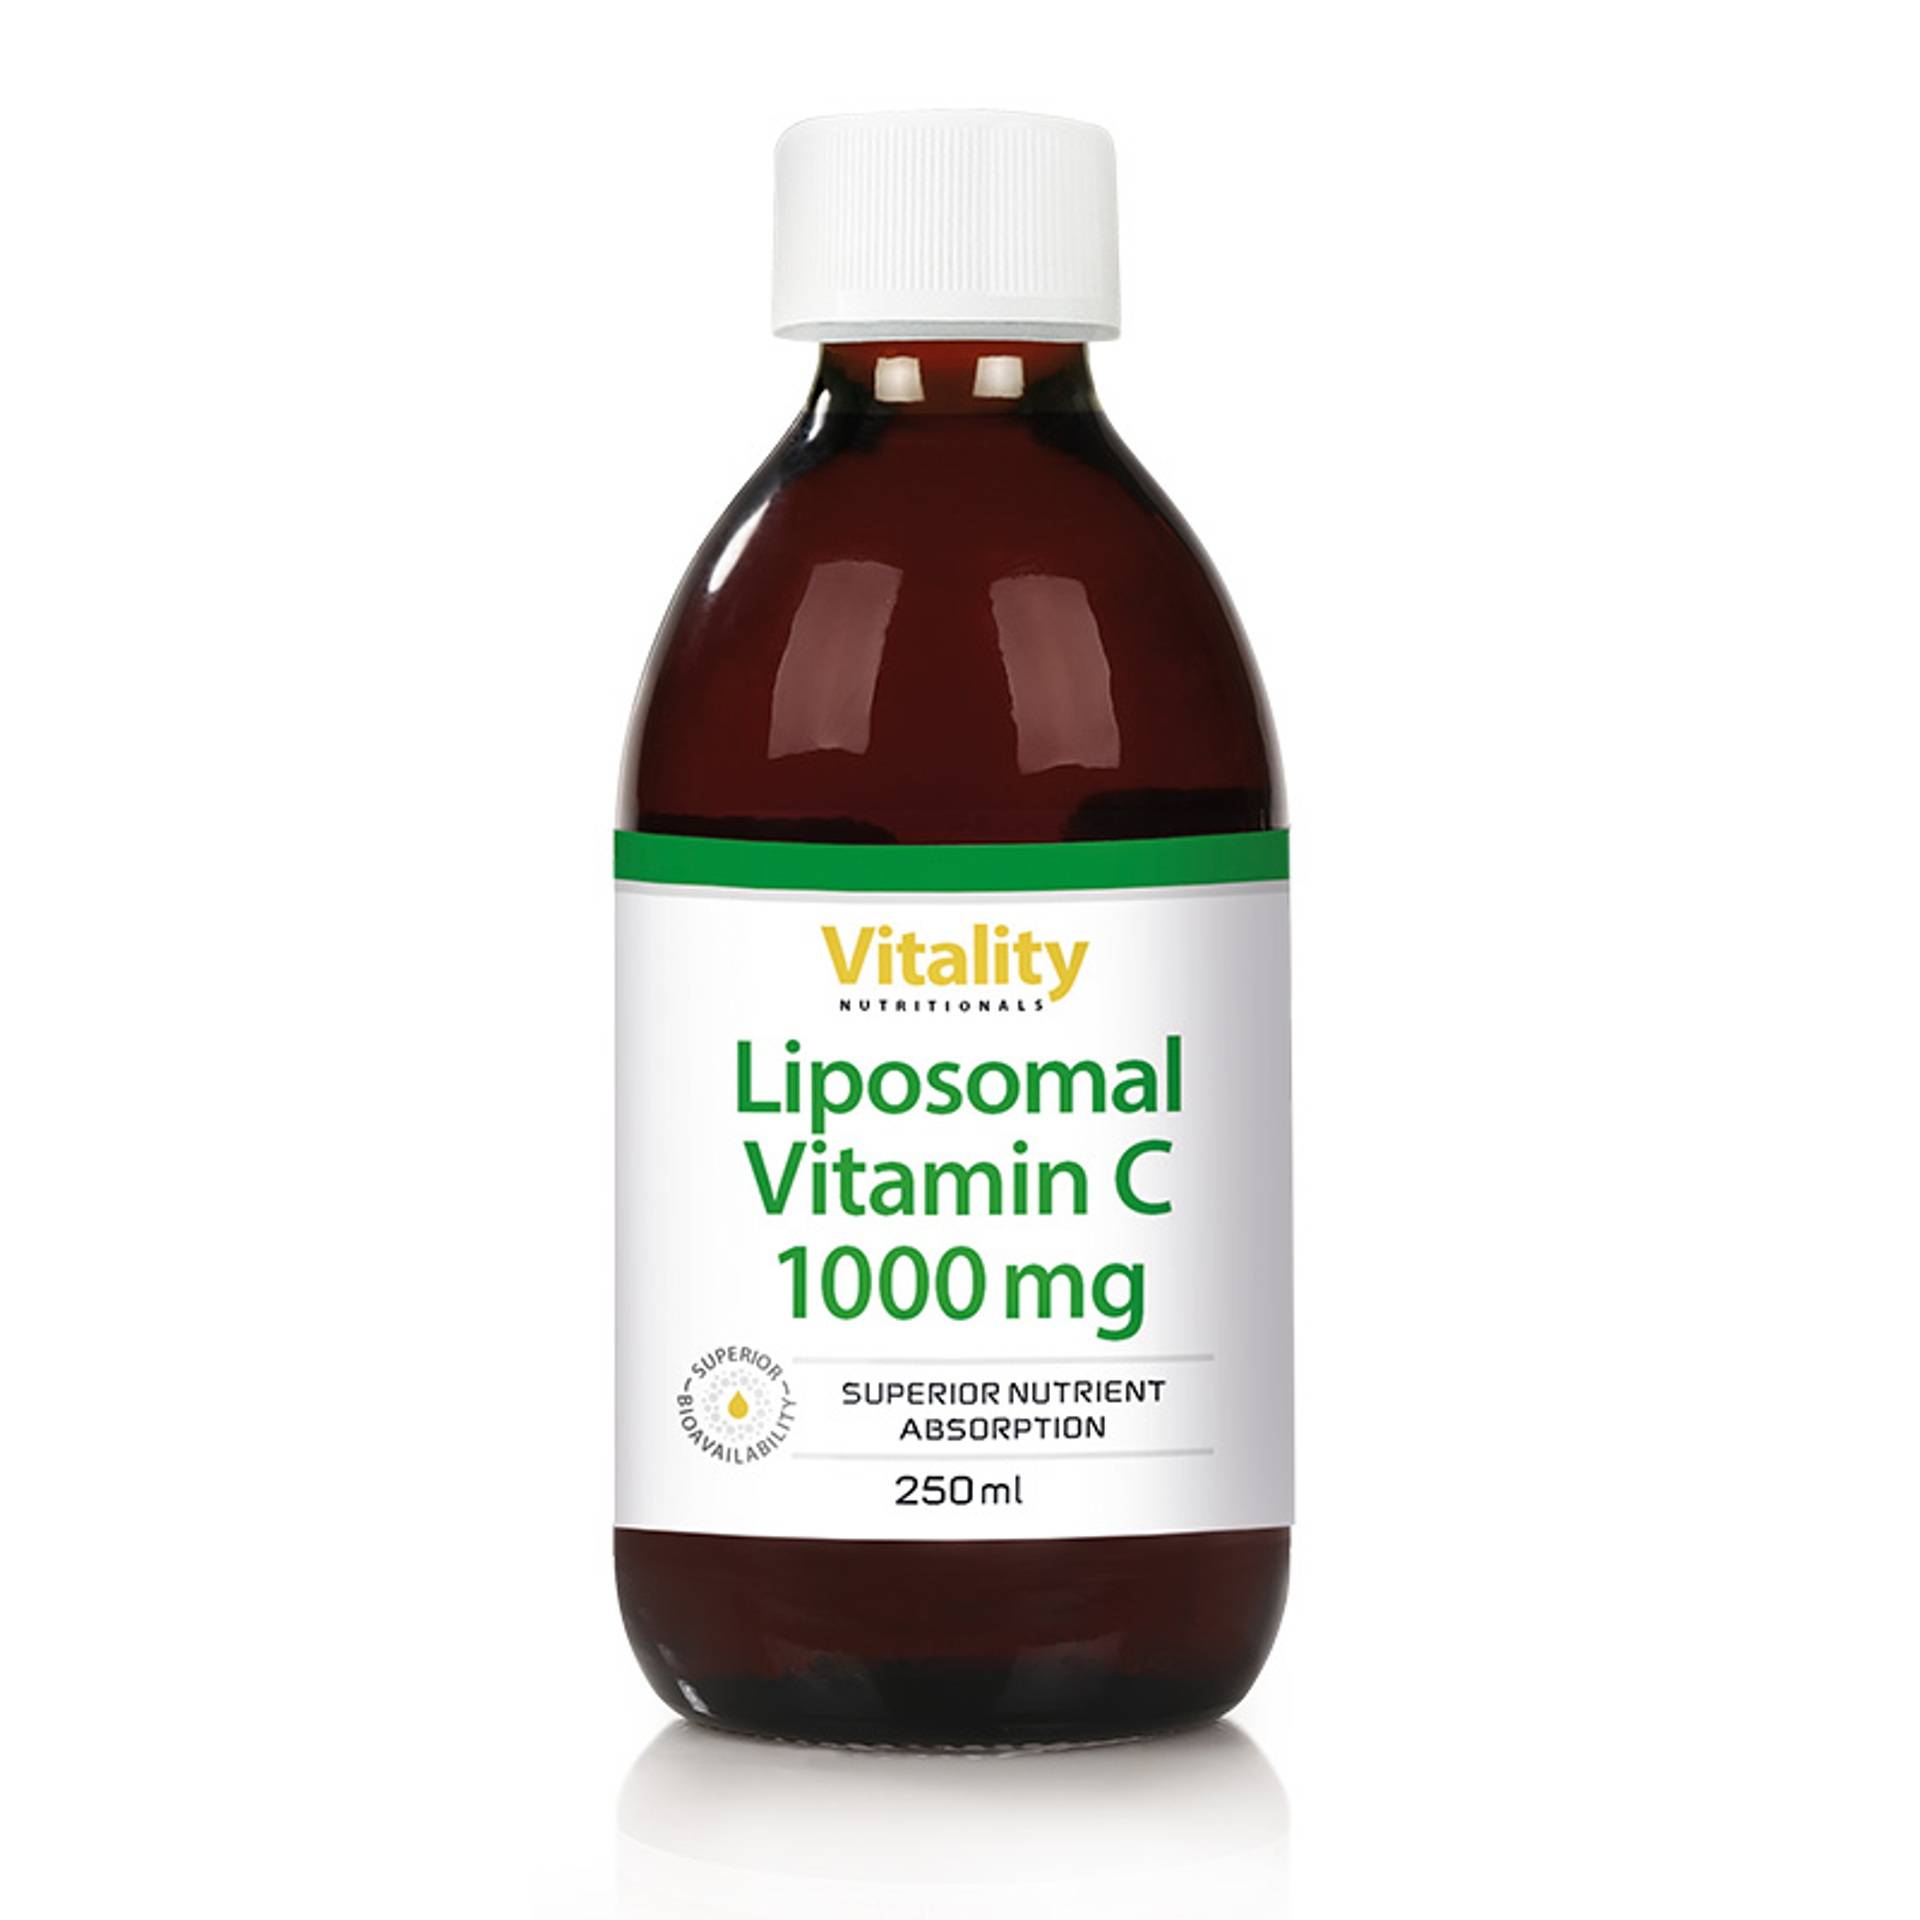 Vitality-Liposomal-Vitamin-C_1000mg_250ml.jpg